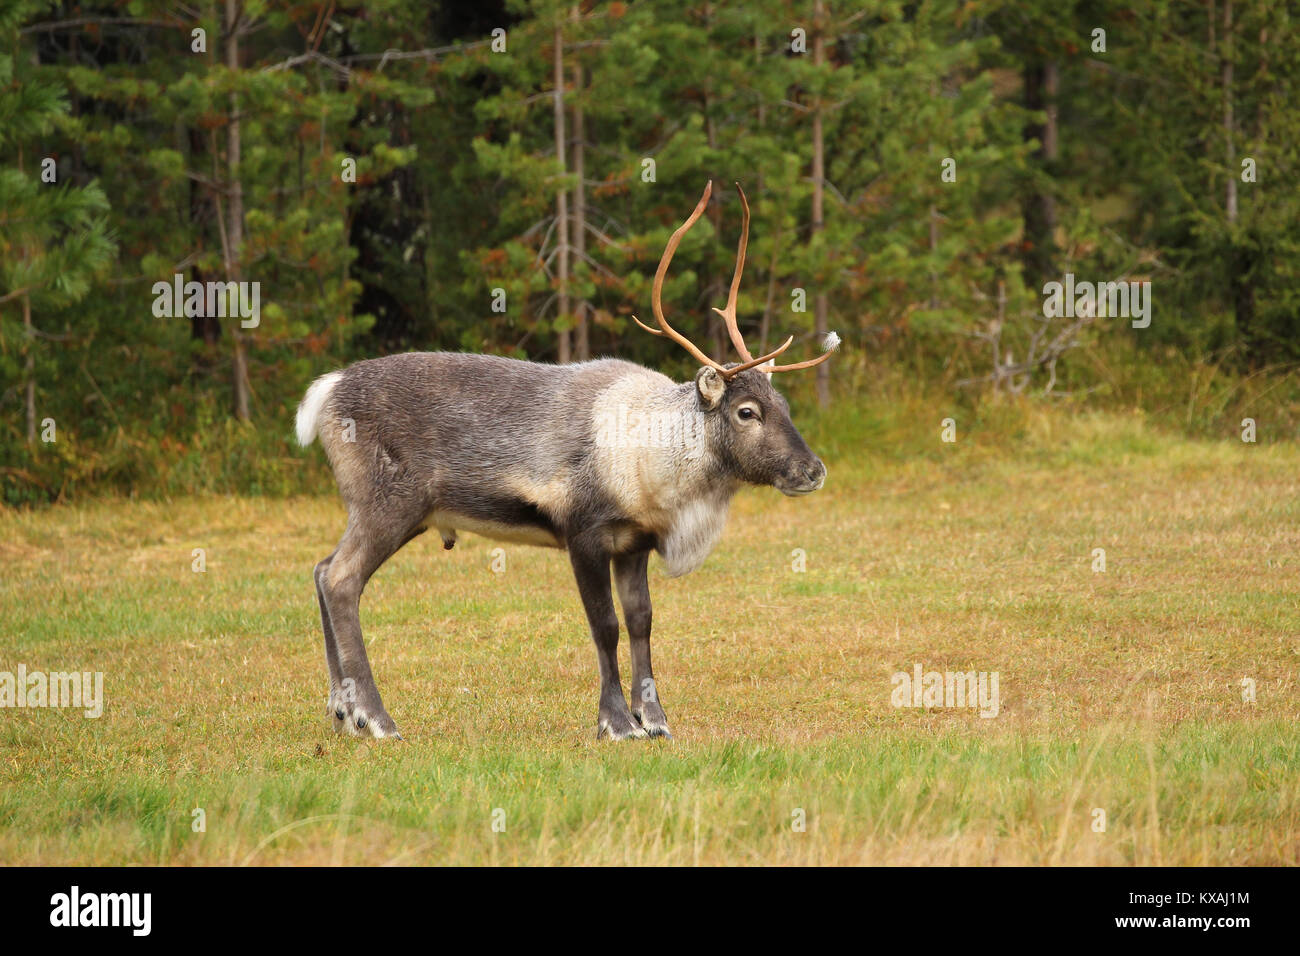 Reindeer (Rangifer tarandus) at the edge of the forest, Lapland, Finland Stock Photo